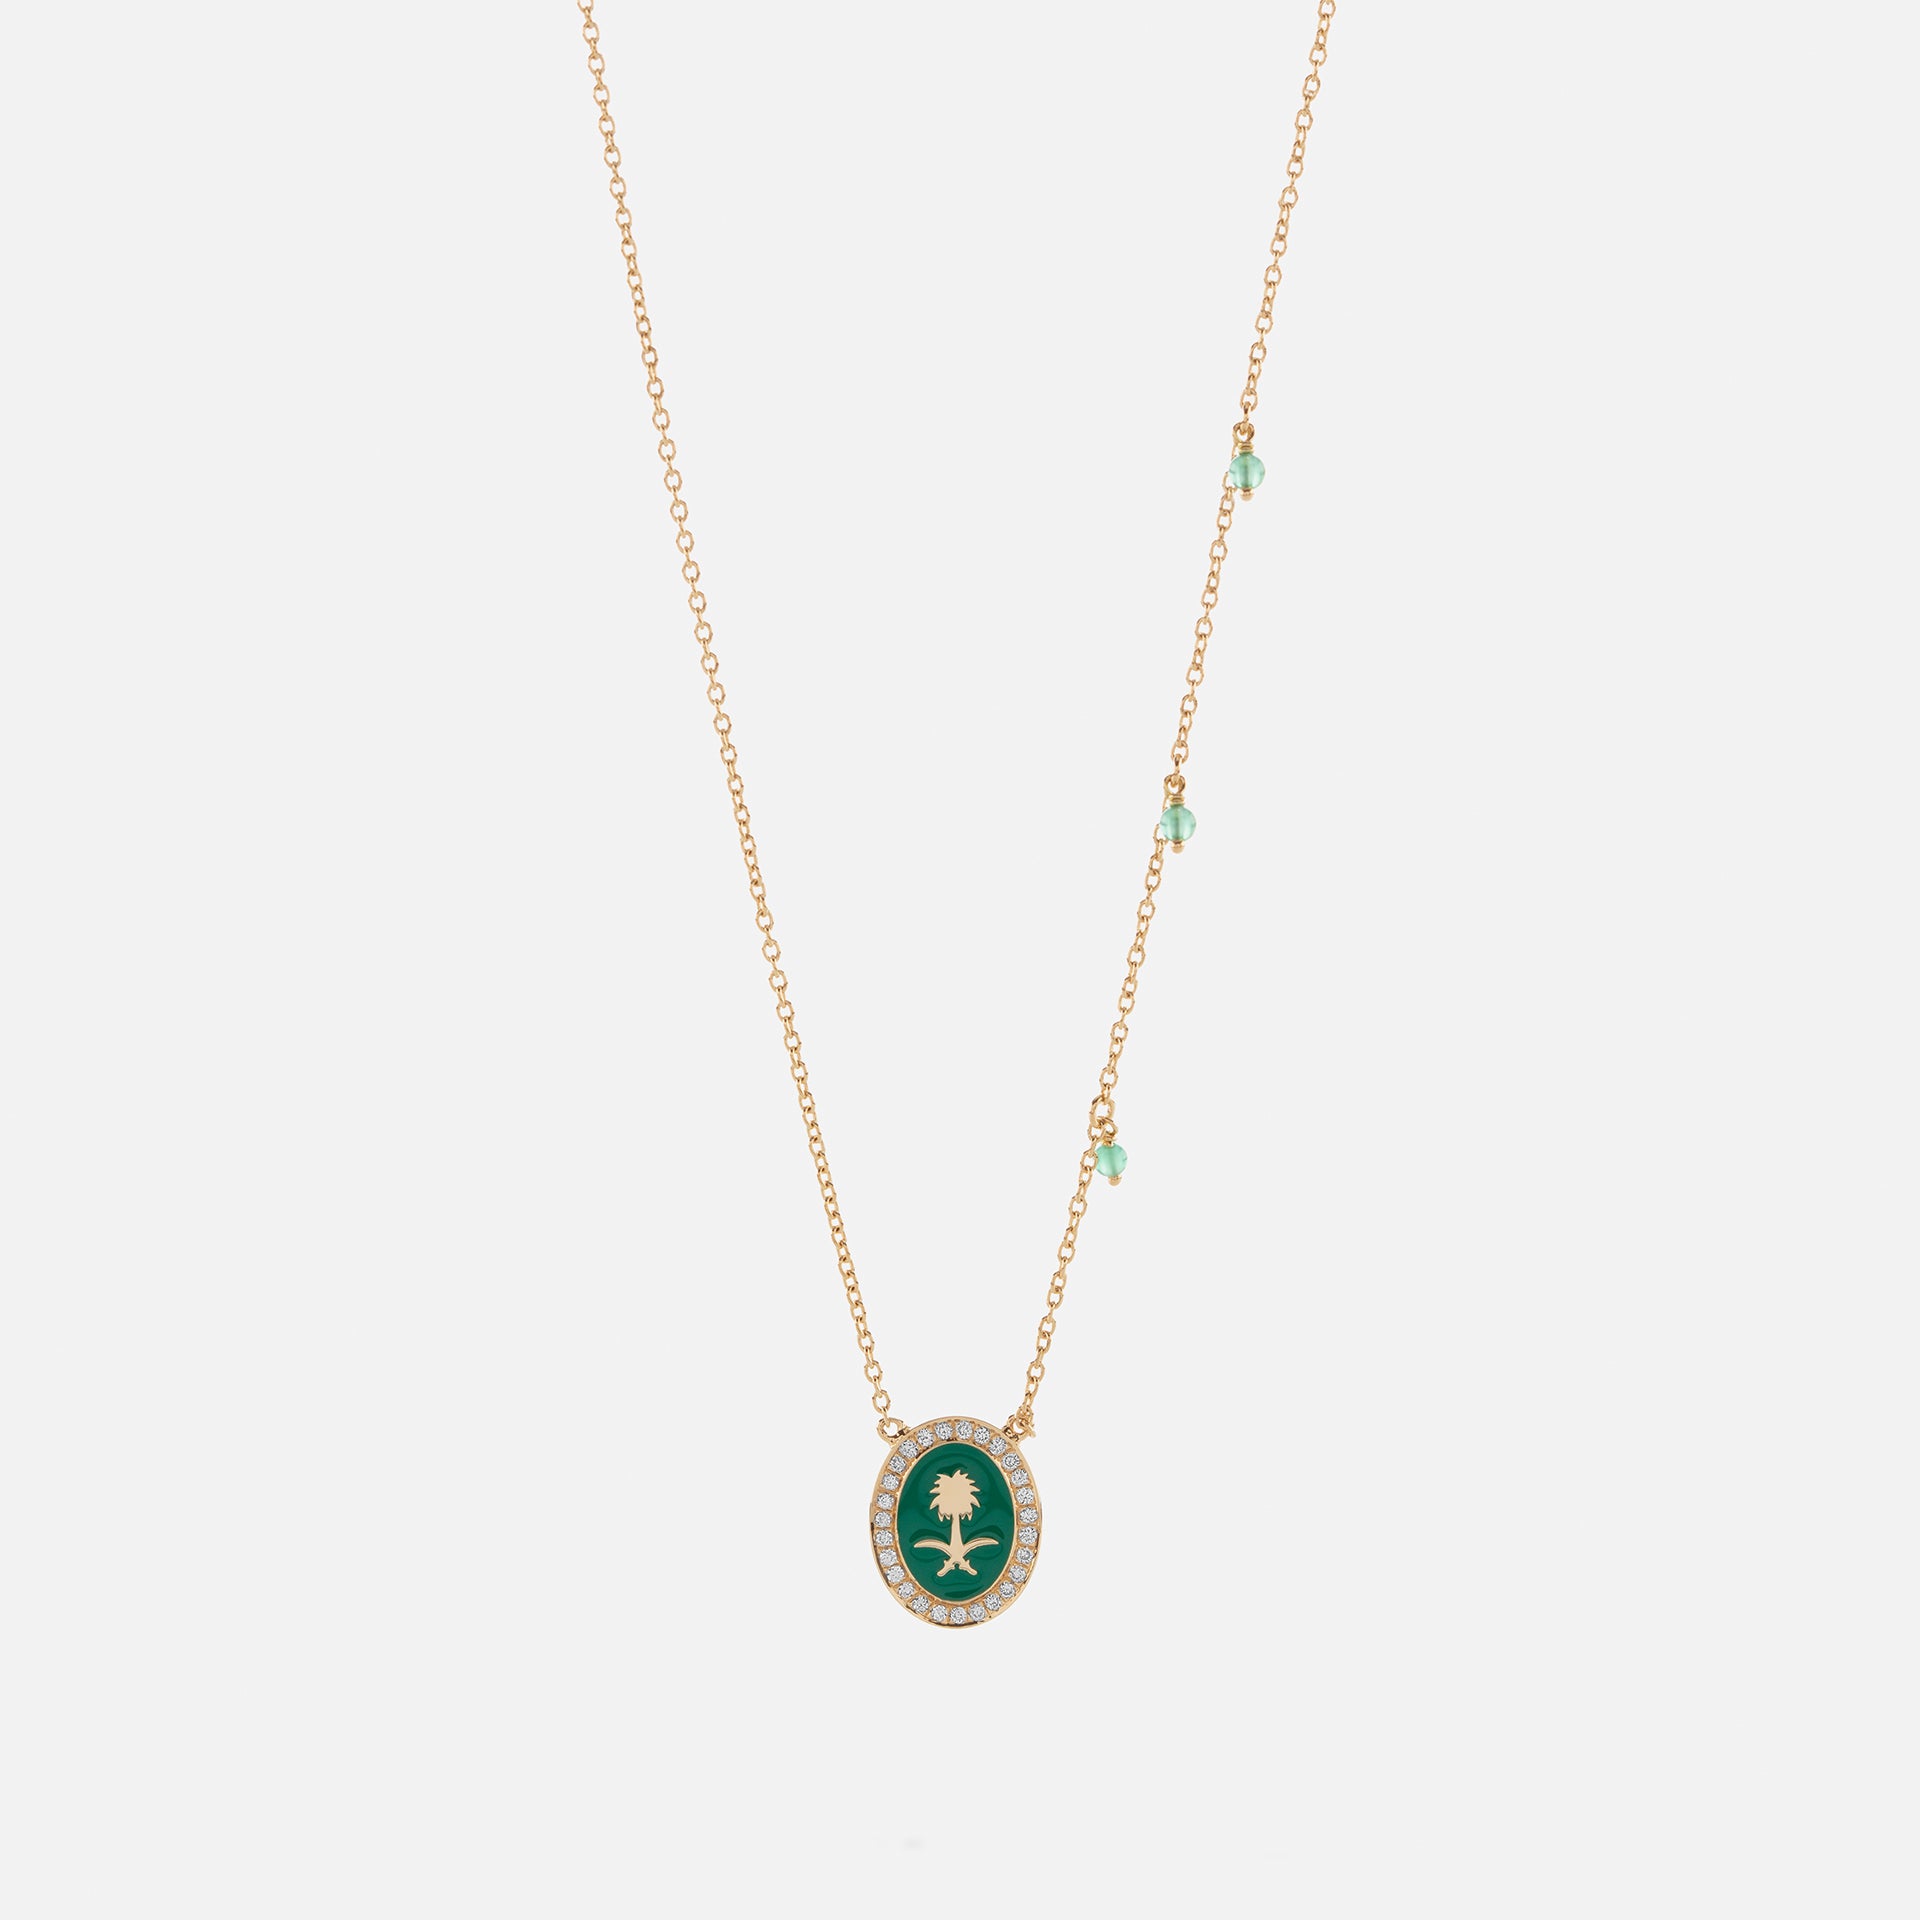 Saudi Necklace in Yellow Gold with Diamonds and Onyx - Al Zain Jewellery